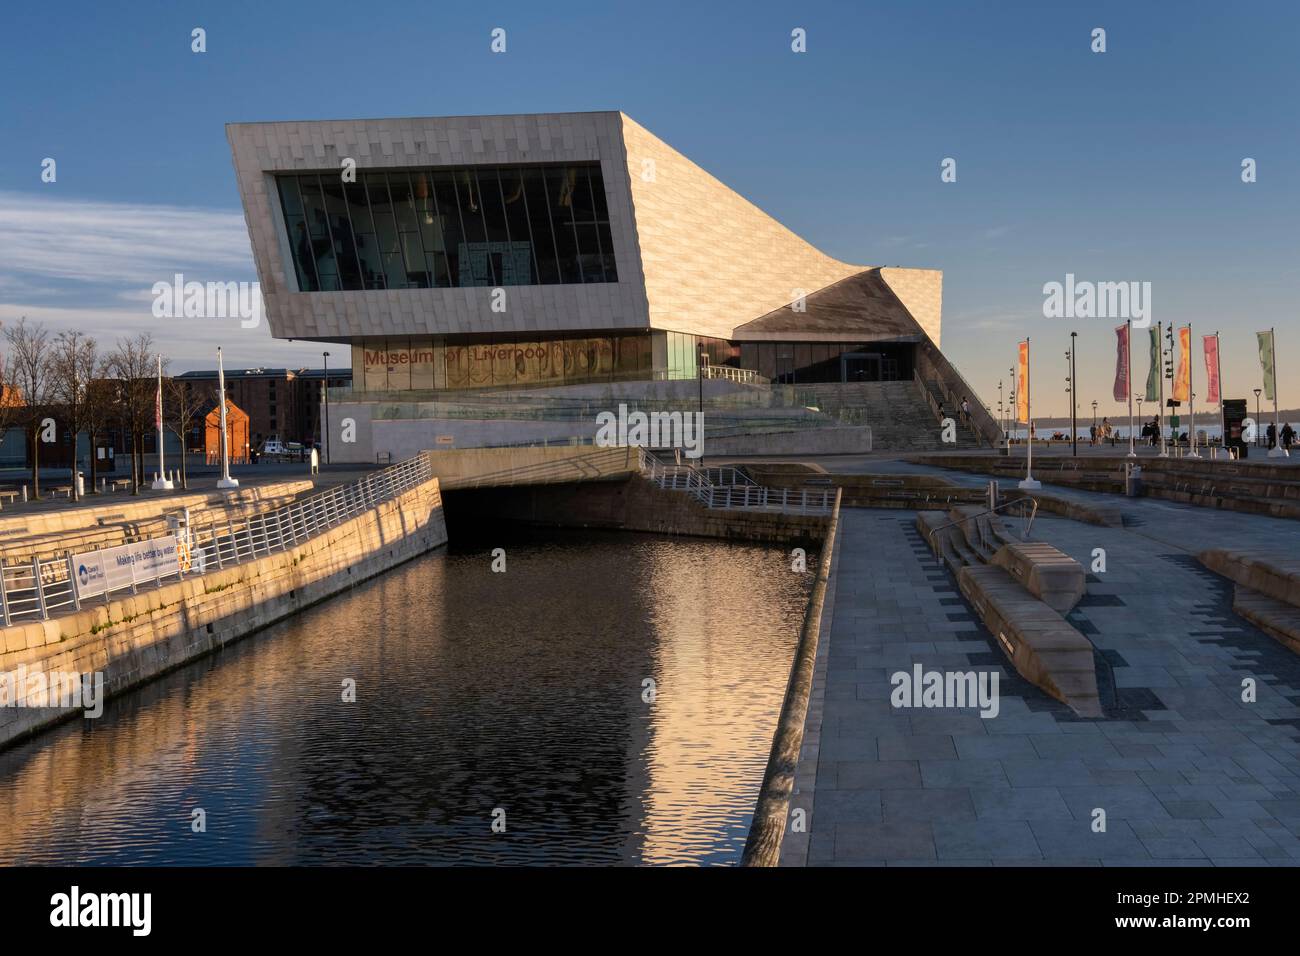 Museum of Liverpool, Pier Head, Liverpool Waterfront, Liverpool, Merseyside, England, United Kingdom, Europe Stock Photo